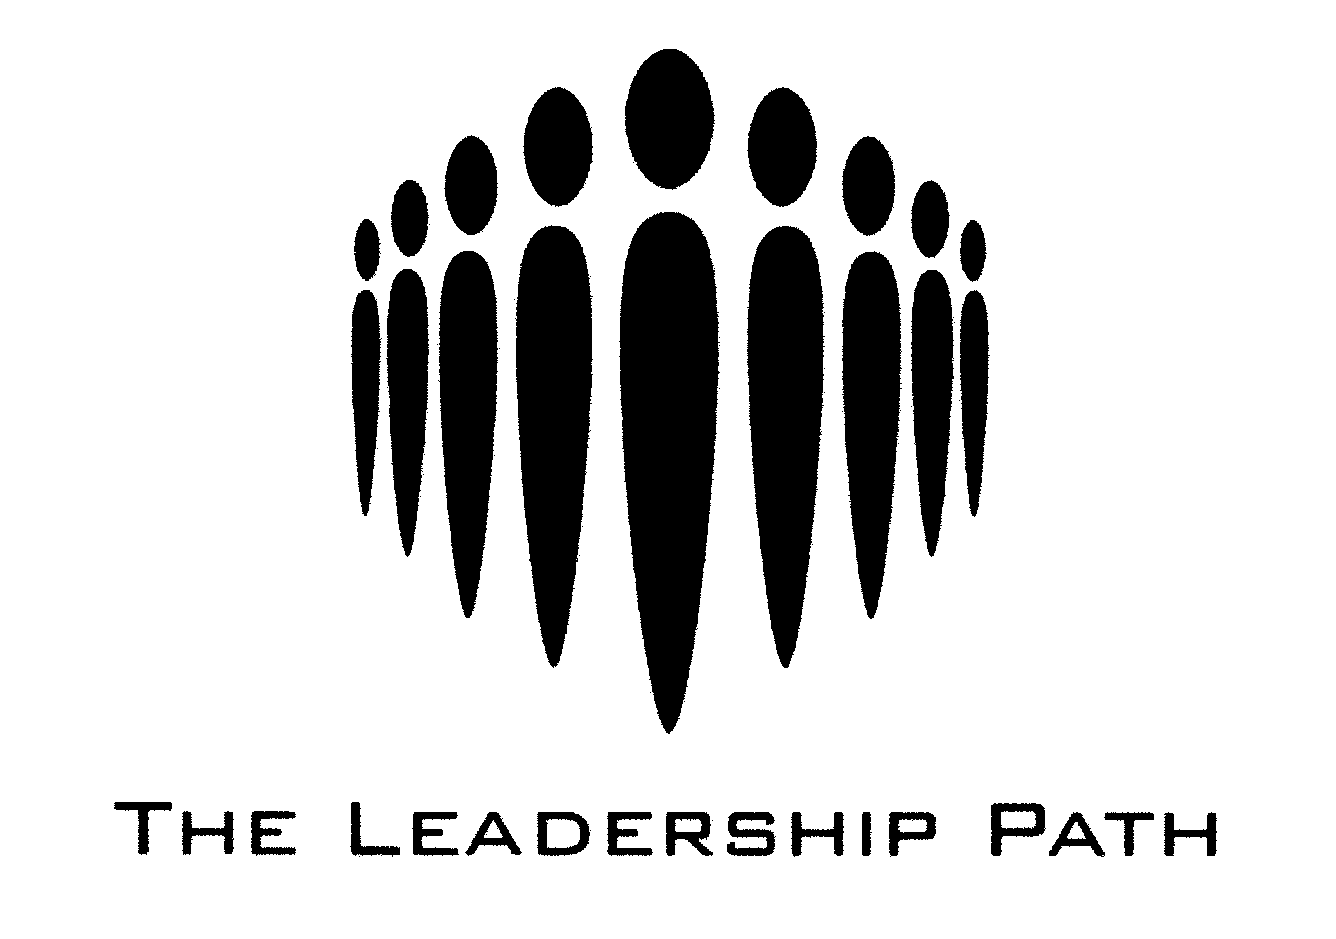  THE LEADERSHIP PATH